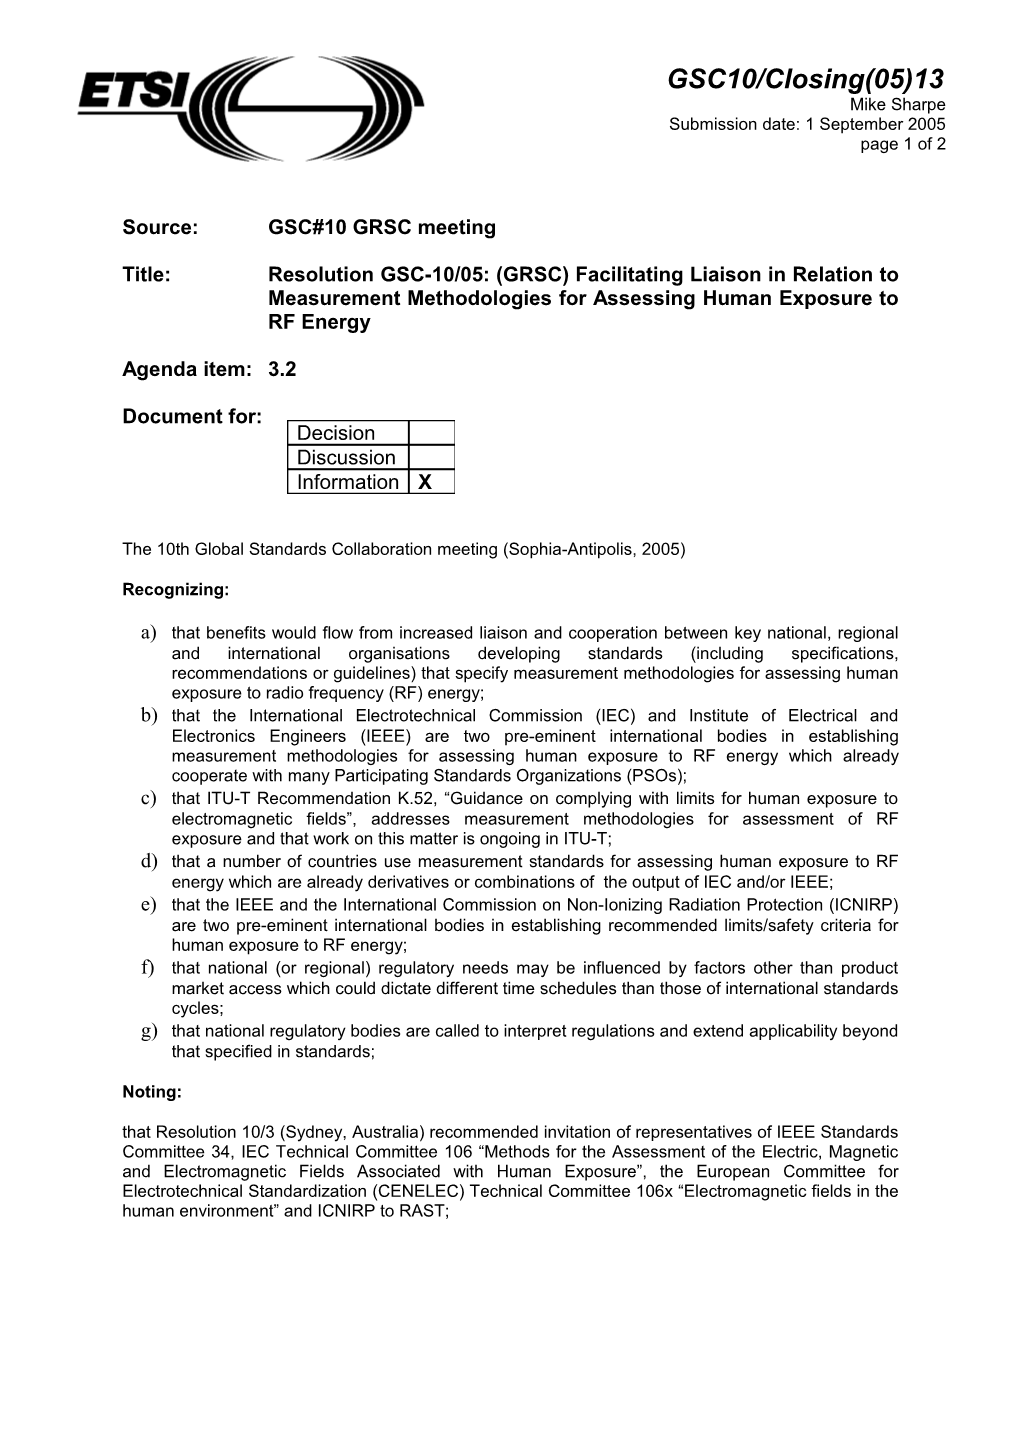 Resolution GSC-10/05: (GRSC) Facilitating Liaison in Relation to Measurement Methodologies